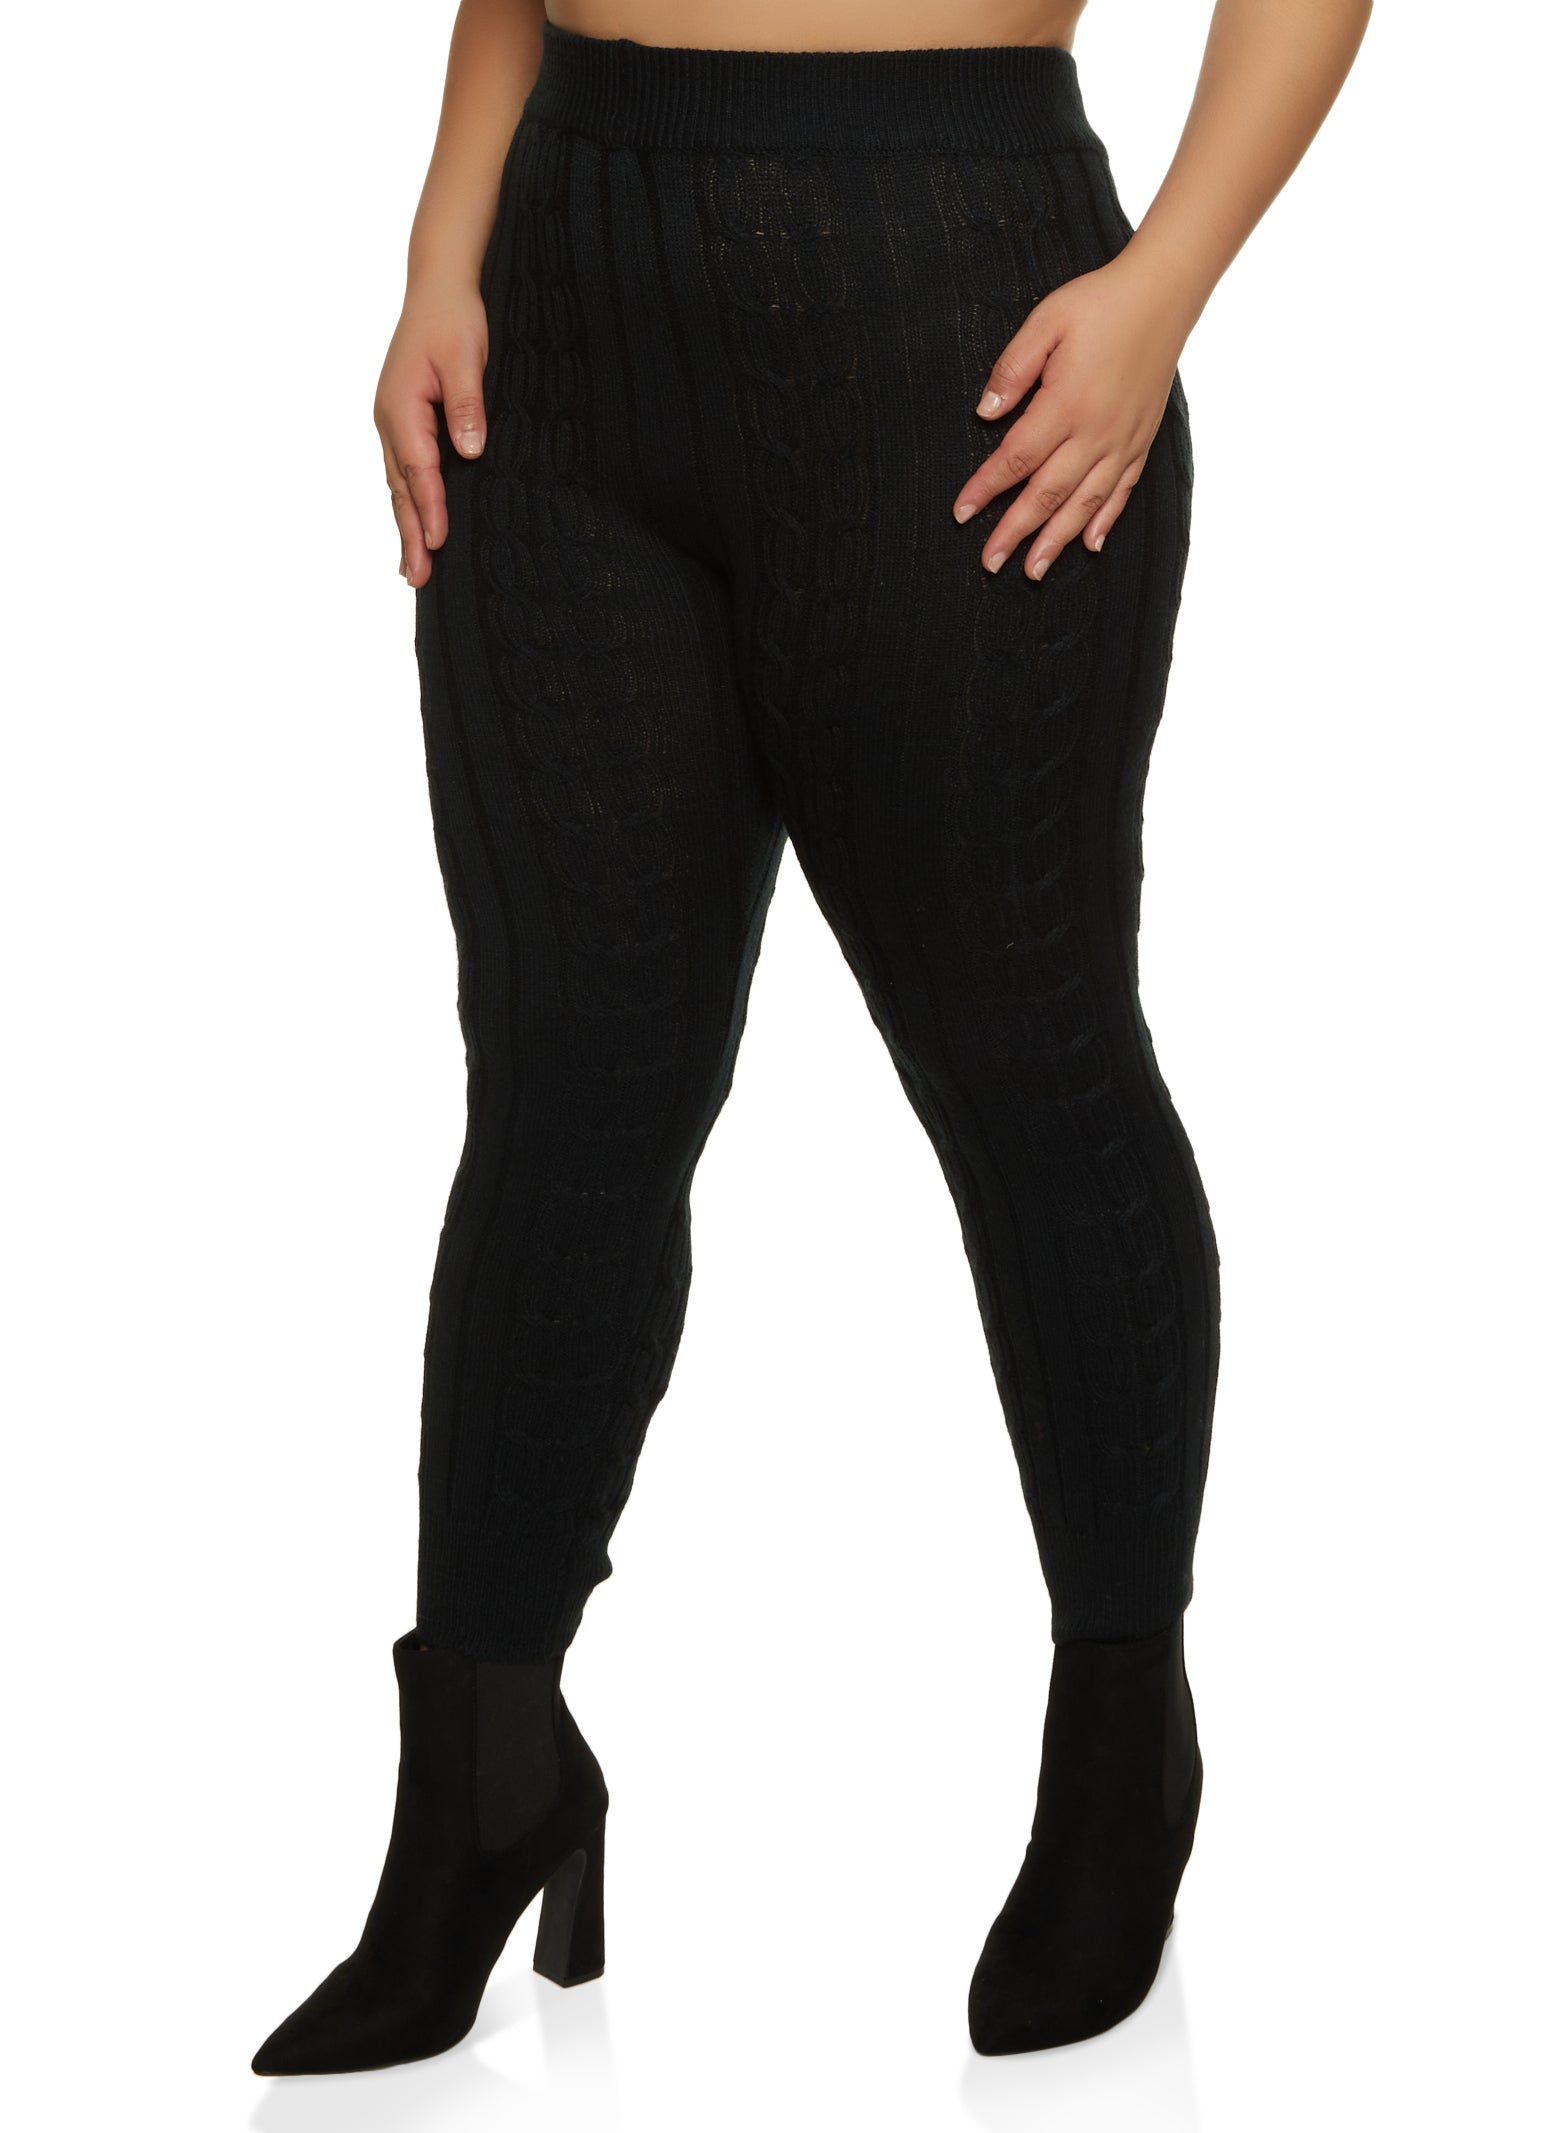 Lovable Black Cotton Ankle Length Tights Yoga Pants – Stilento